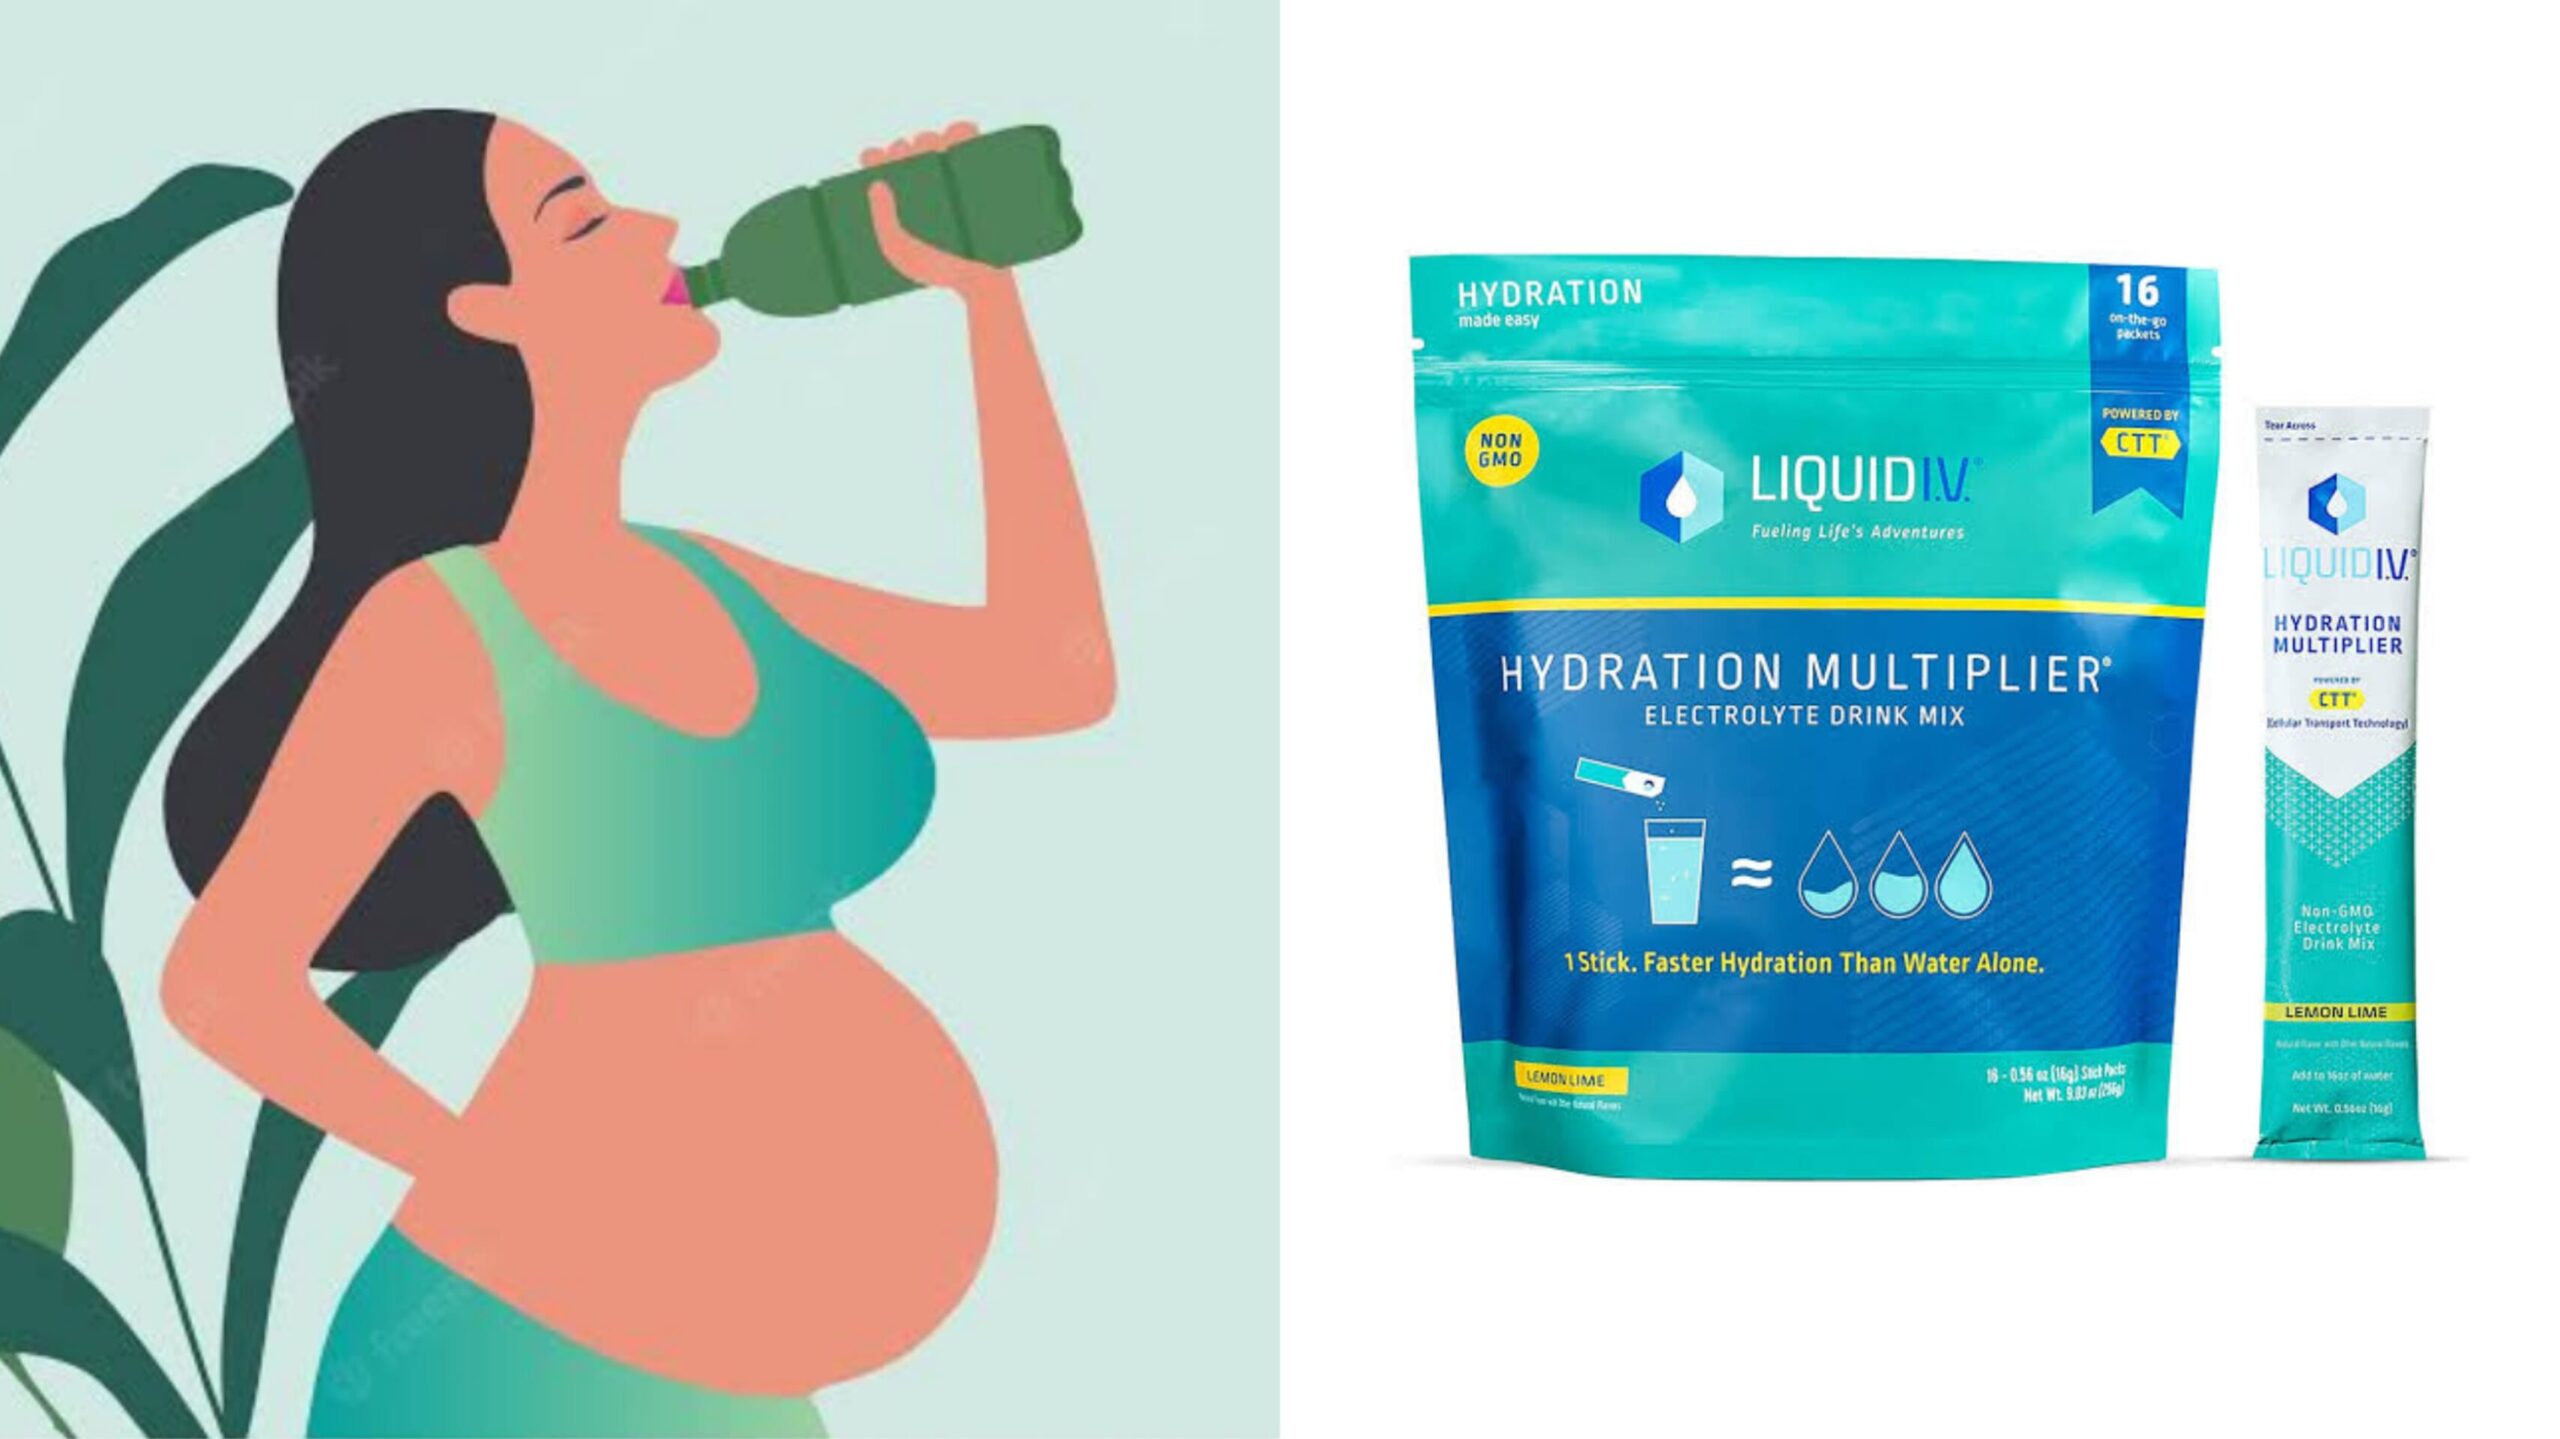 Is liquid iv safe for Pregnancy?